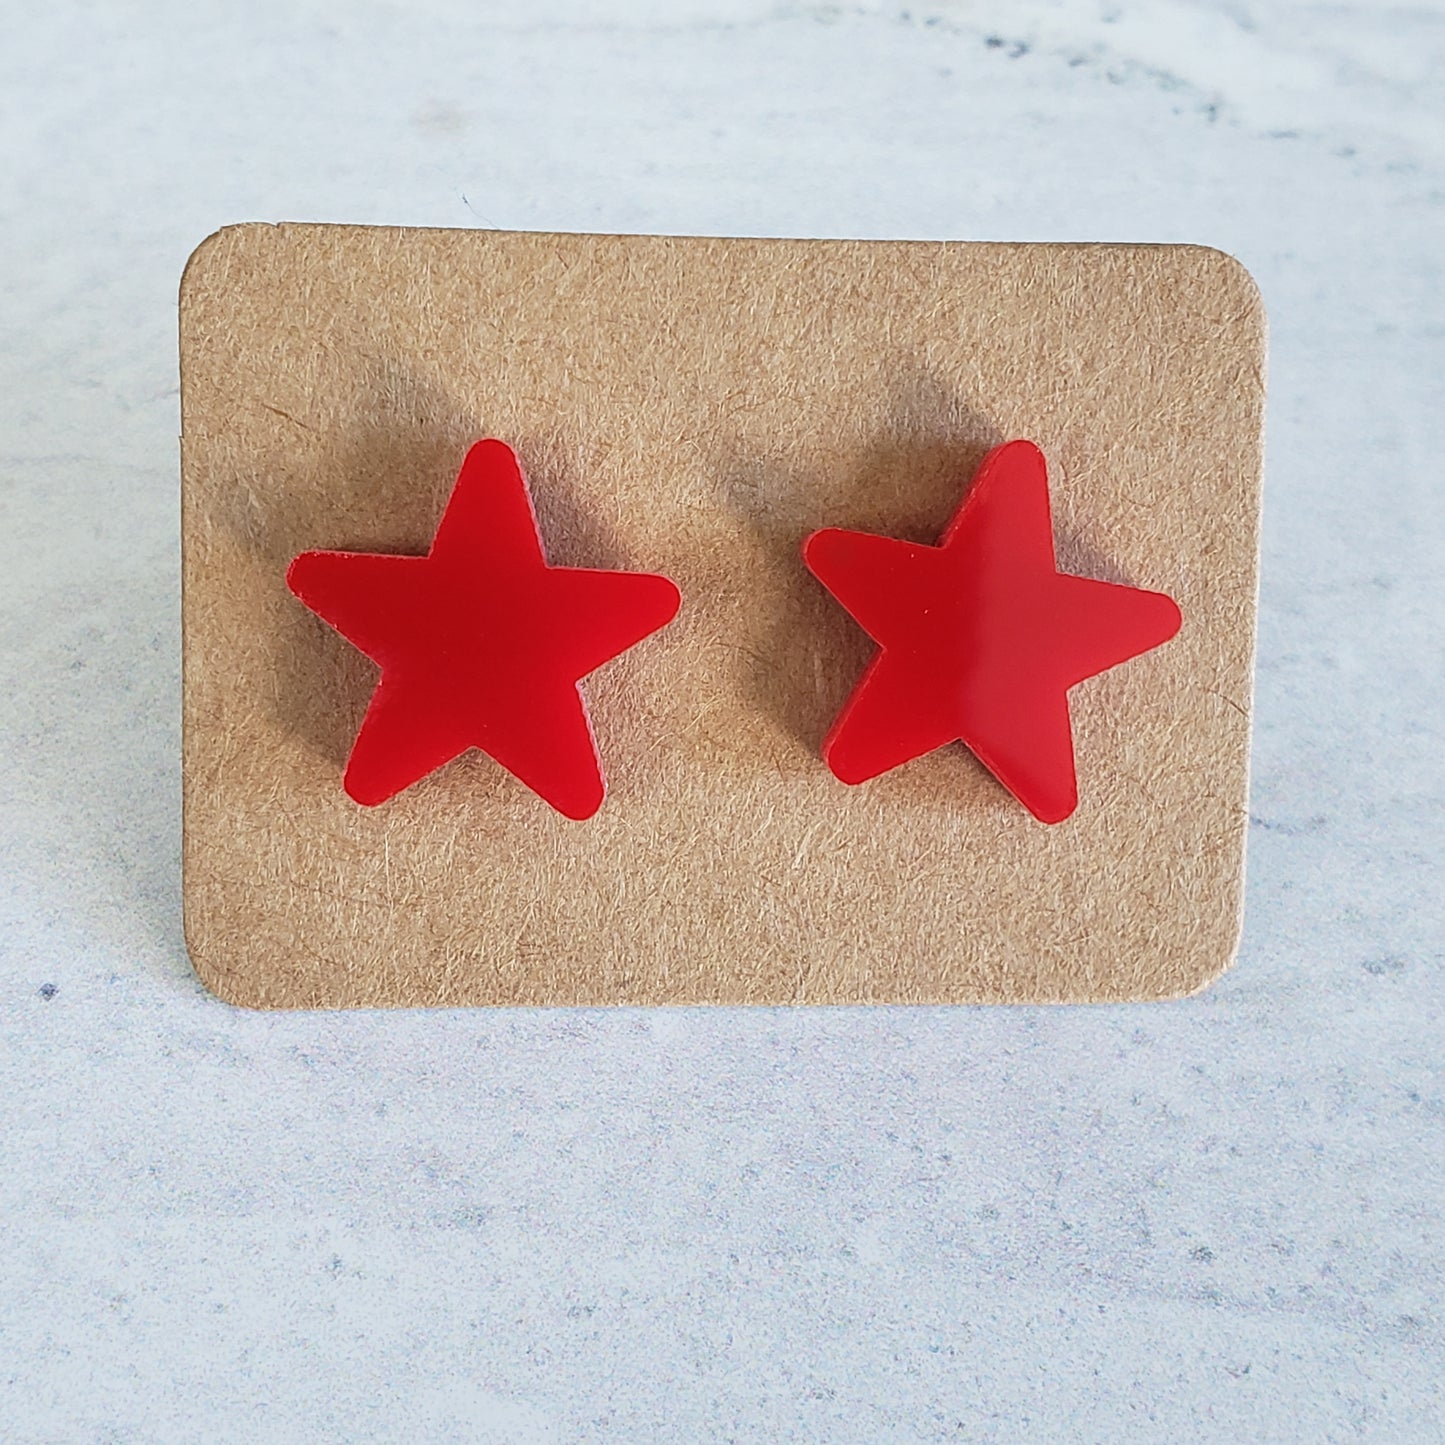 Red star stud earrings on earring card